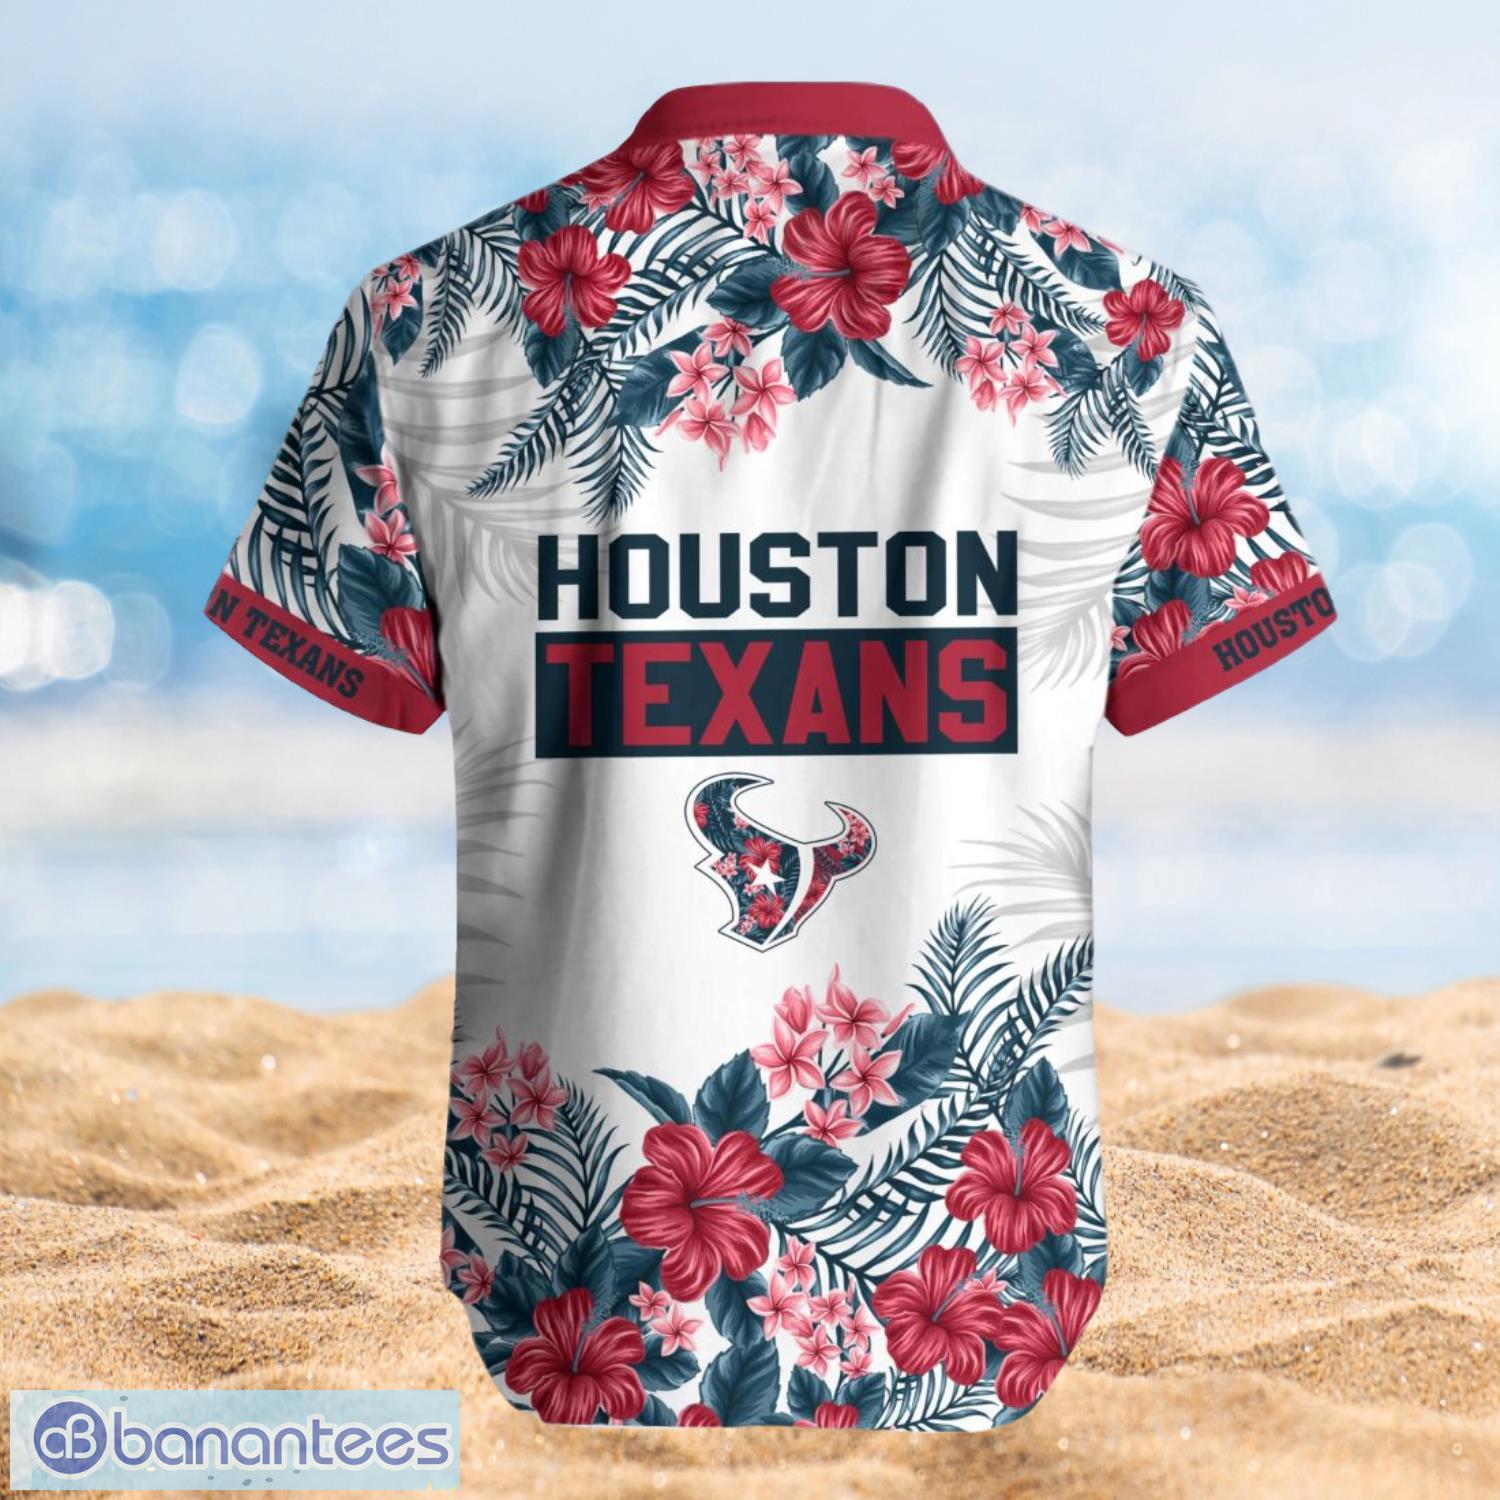 Houston Texans Summer Beach Shirt and Shorts Full Over Print Product Photo 2